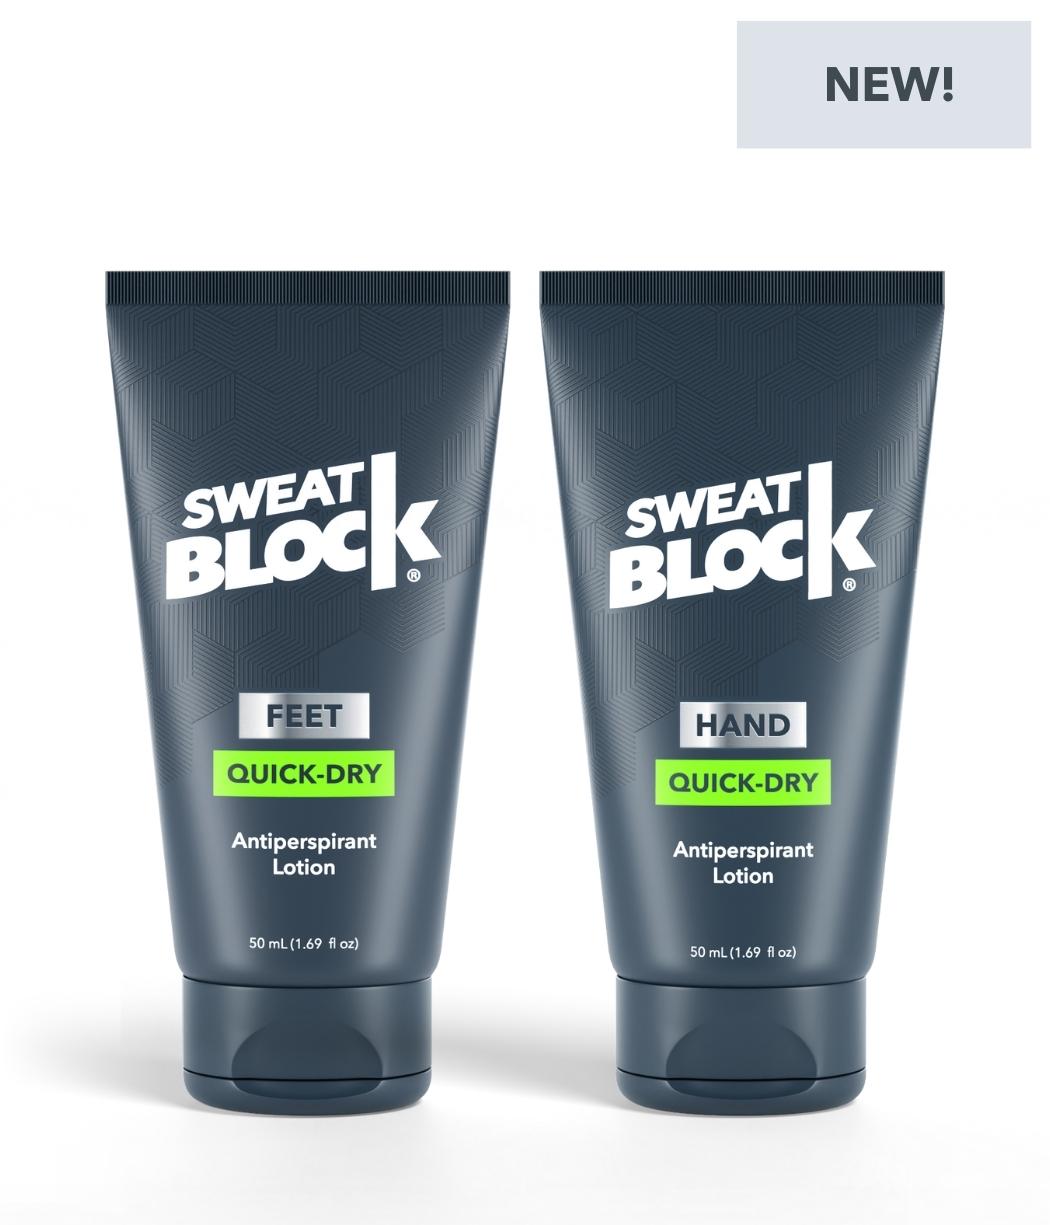 SweatBlock Quick-Dry Antiperspirant Lotions for Hands & Feet.